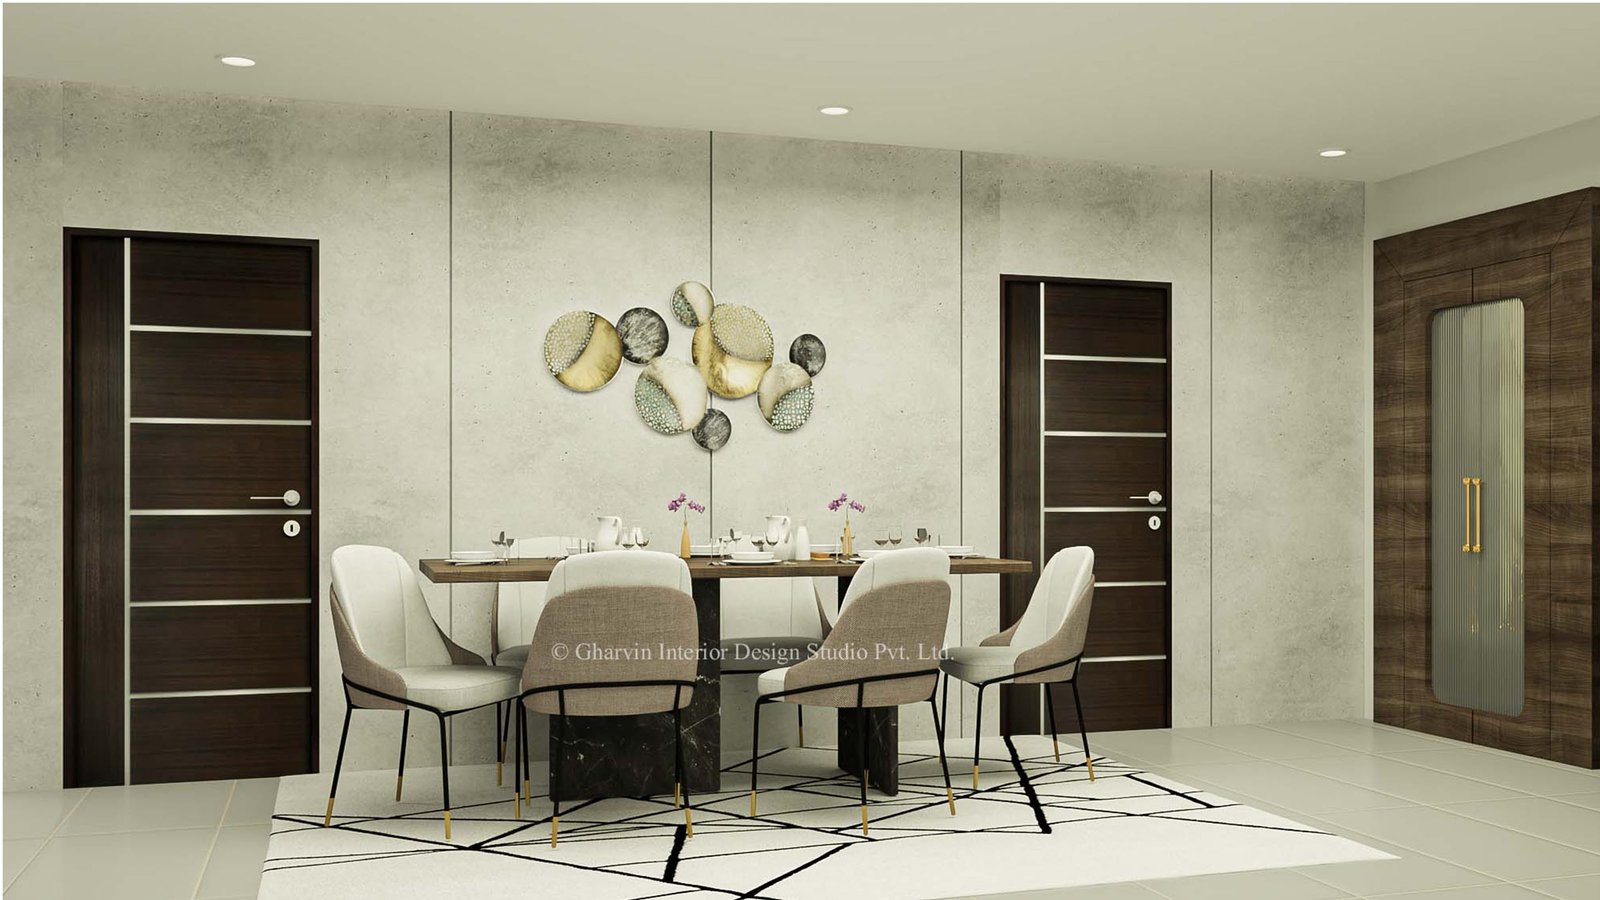 Dining room interior design ideas 4